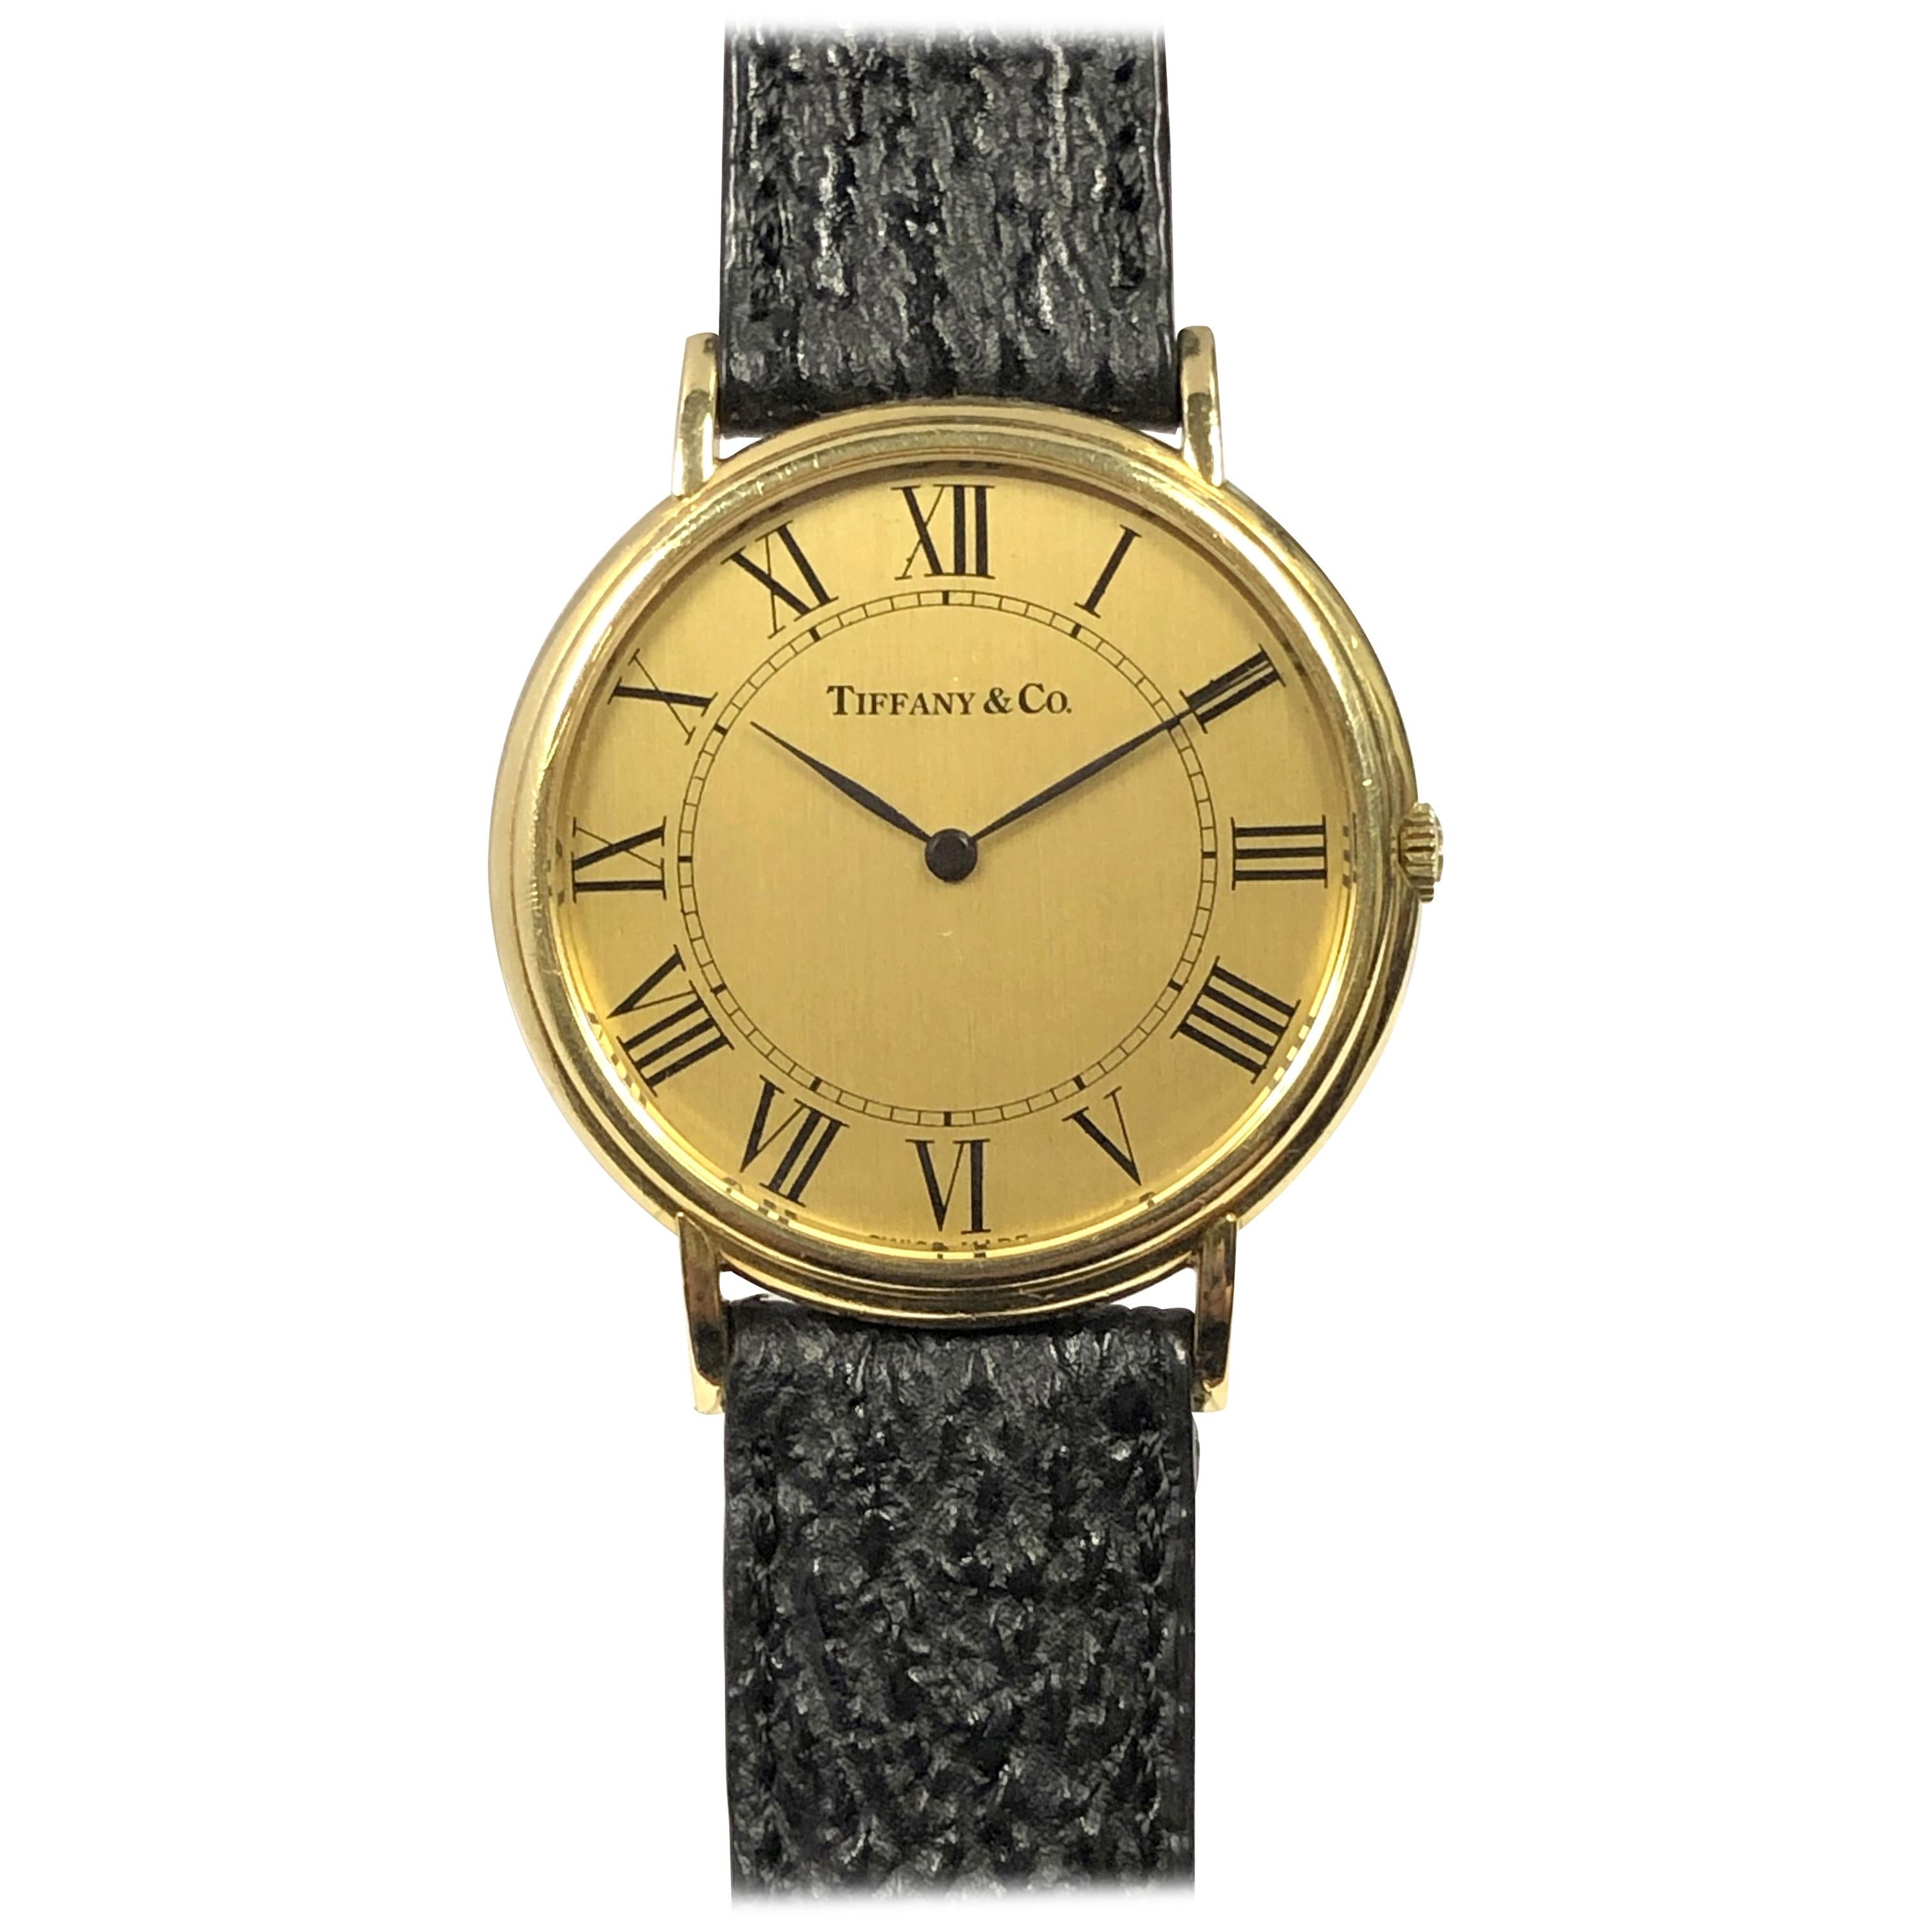 Tiffany & Co Movado Yellow Gold Gents Mechanical Wrist Watch